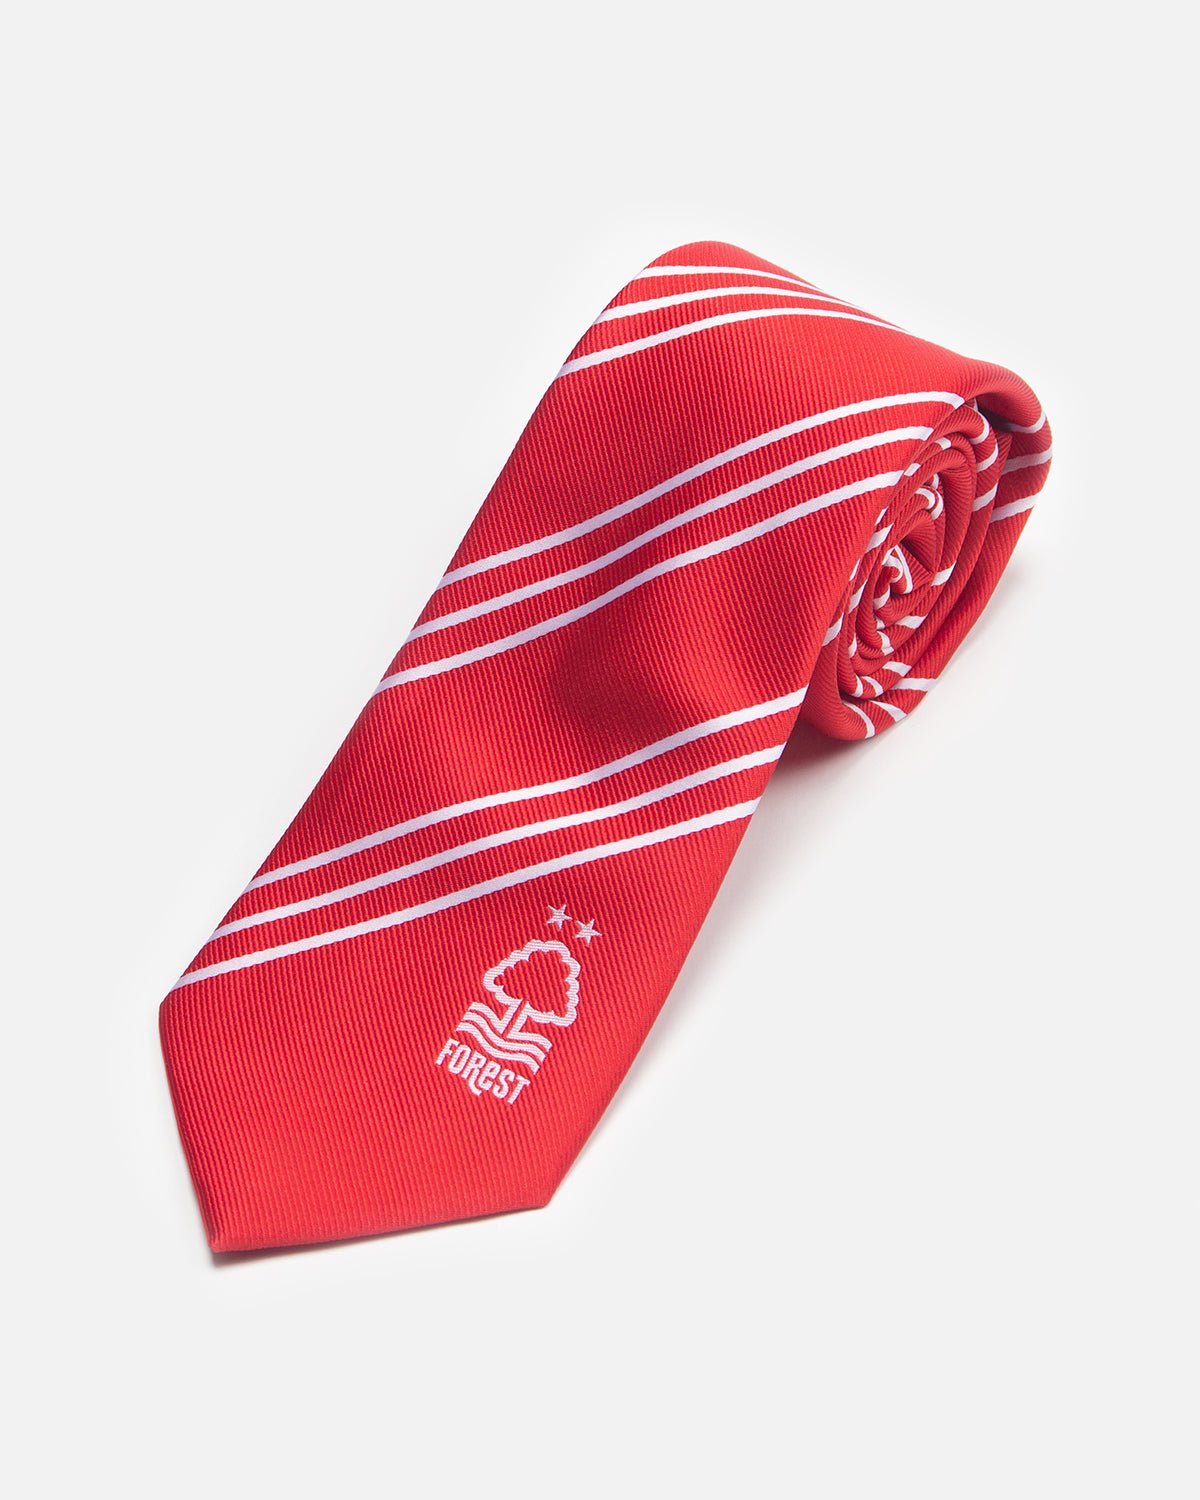 NFFC Red Multi Stripe Tie - Nottingham Forest FC